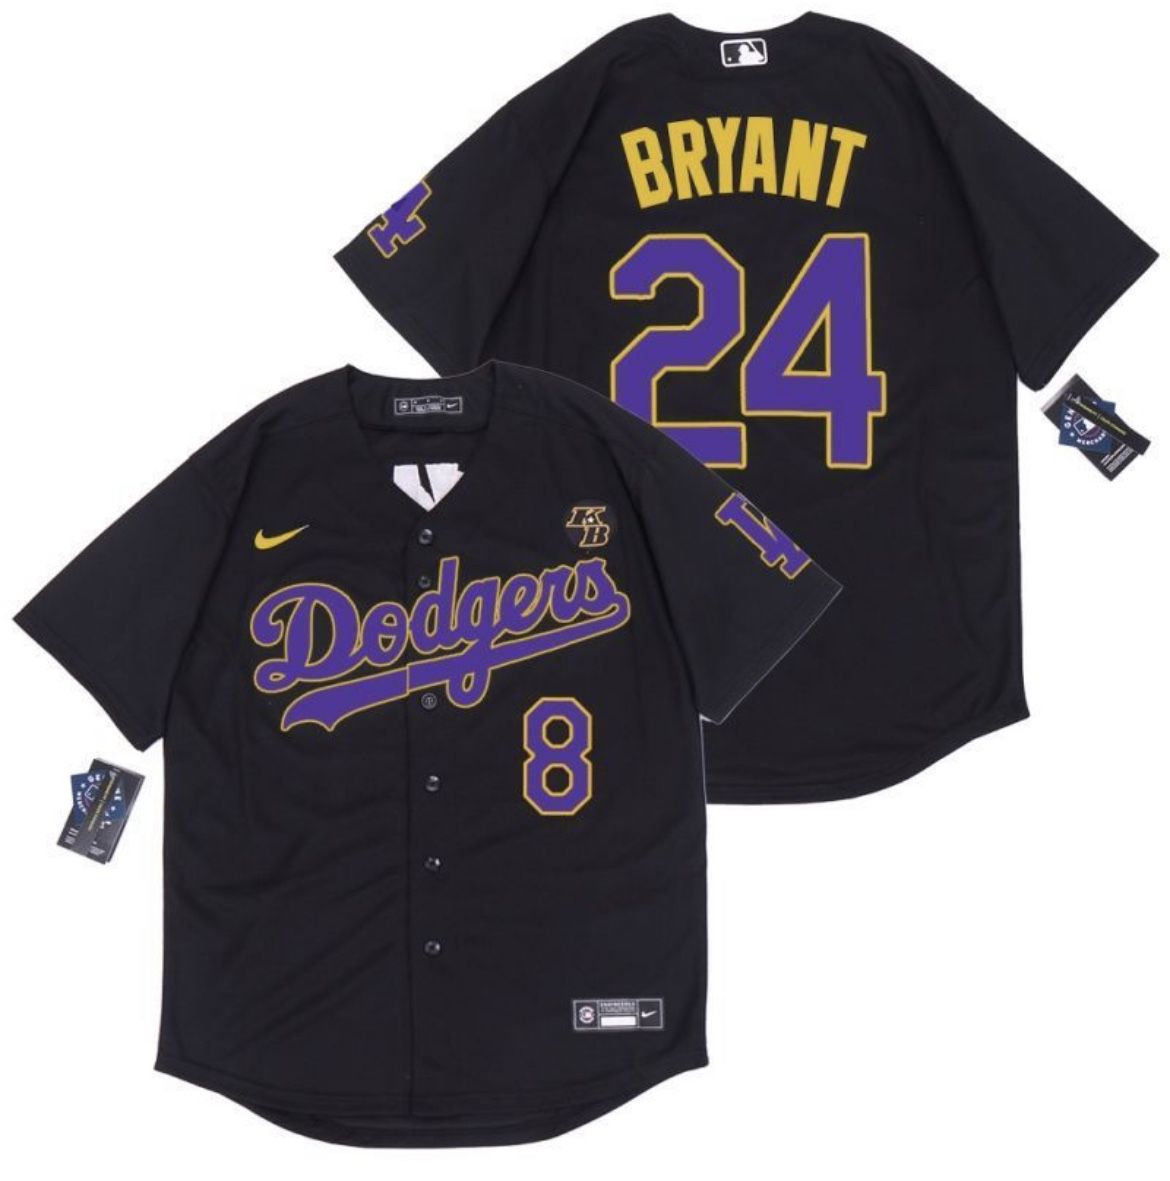 Lakers - Dodgers Jersey - Kobe Bryant (Size Medium)